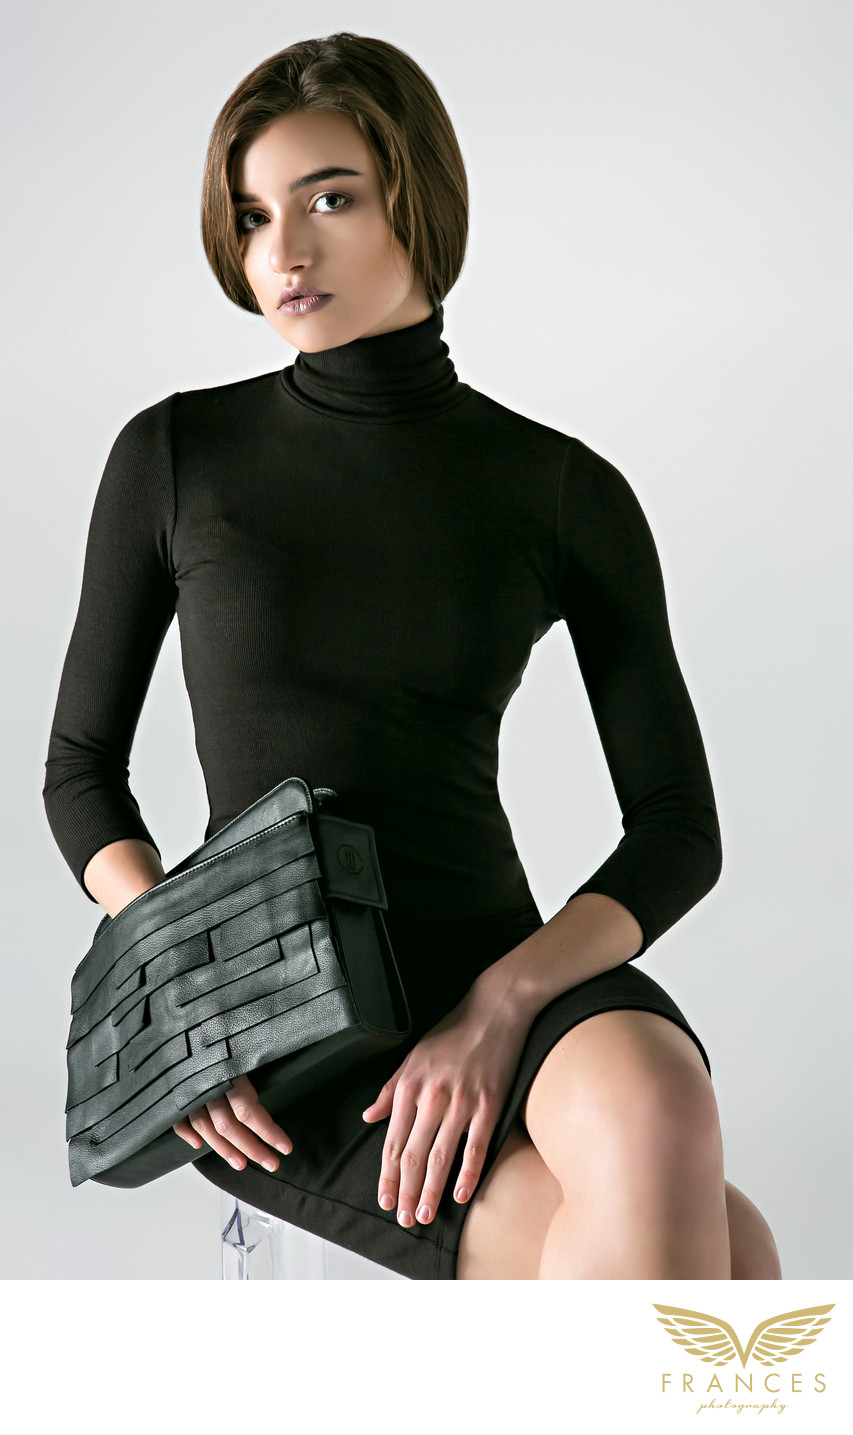 Product release shoot Denver fashion photographer